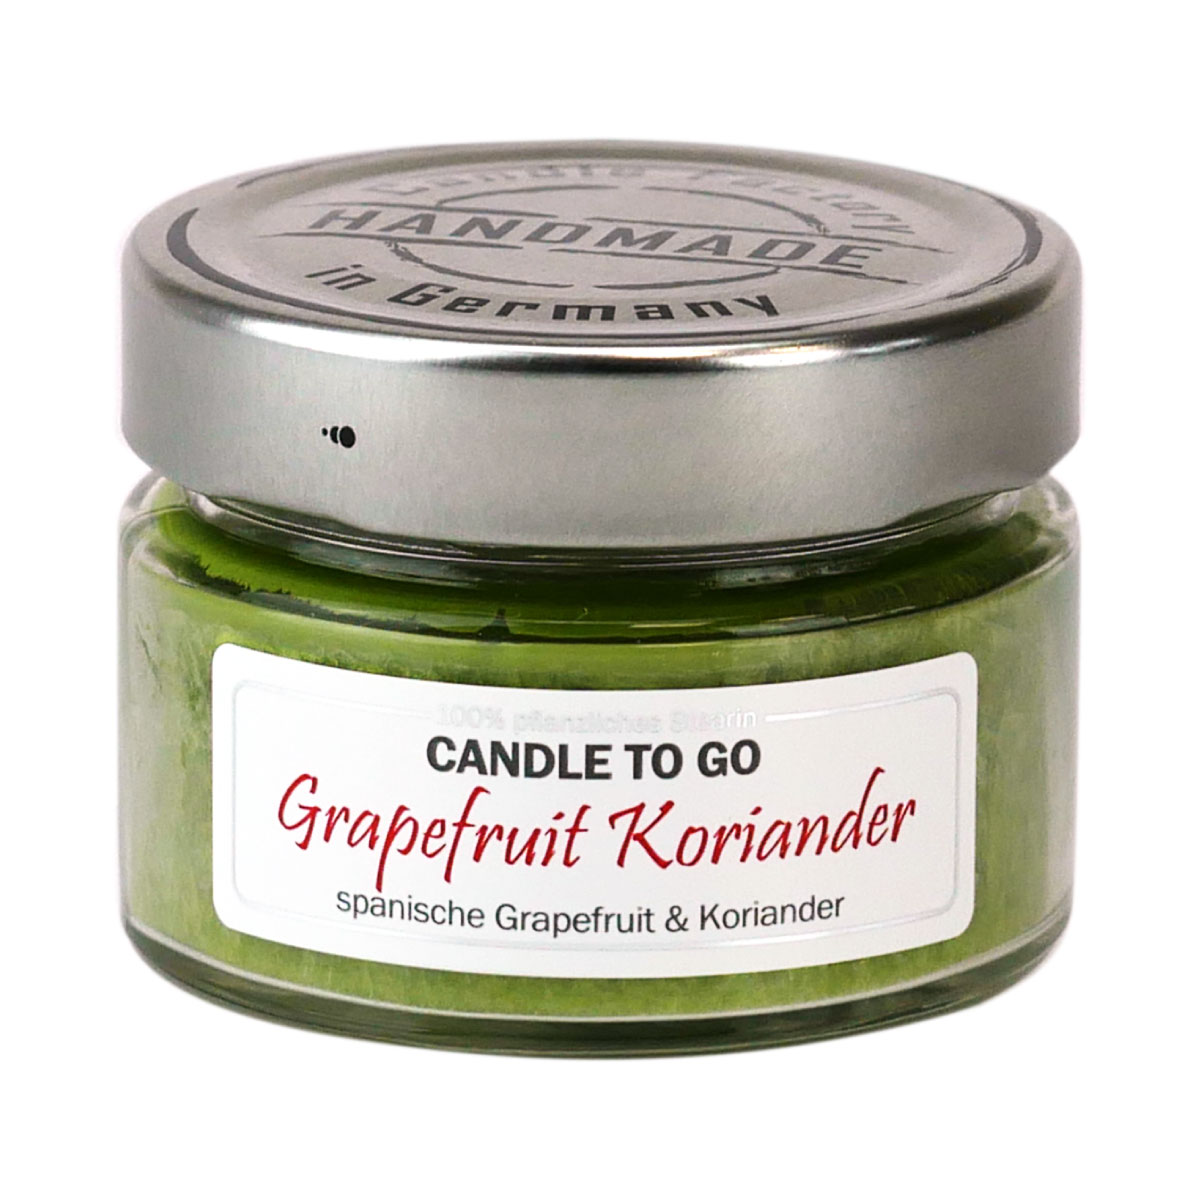 Grapefruit Koriander - Candle to Go Duftkerze von Candle Factory